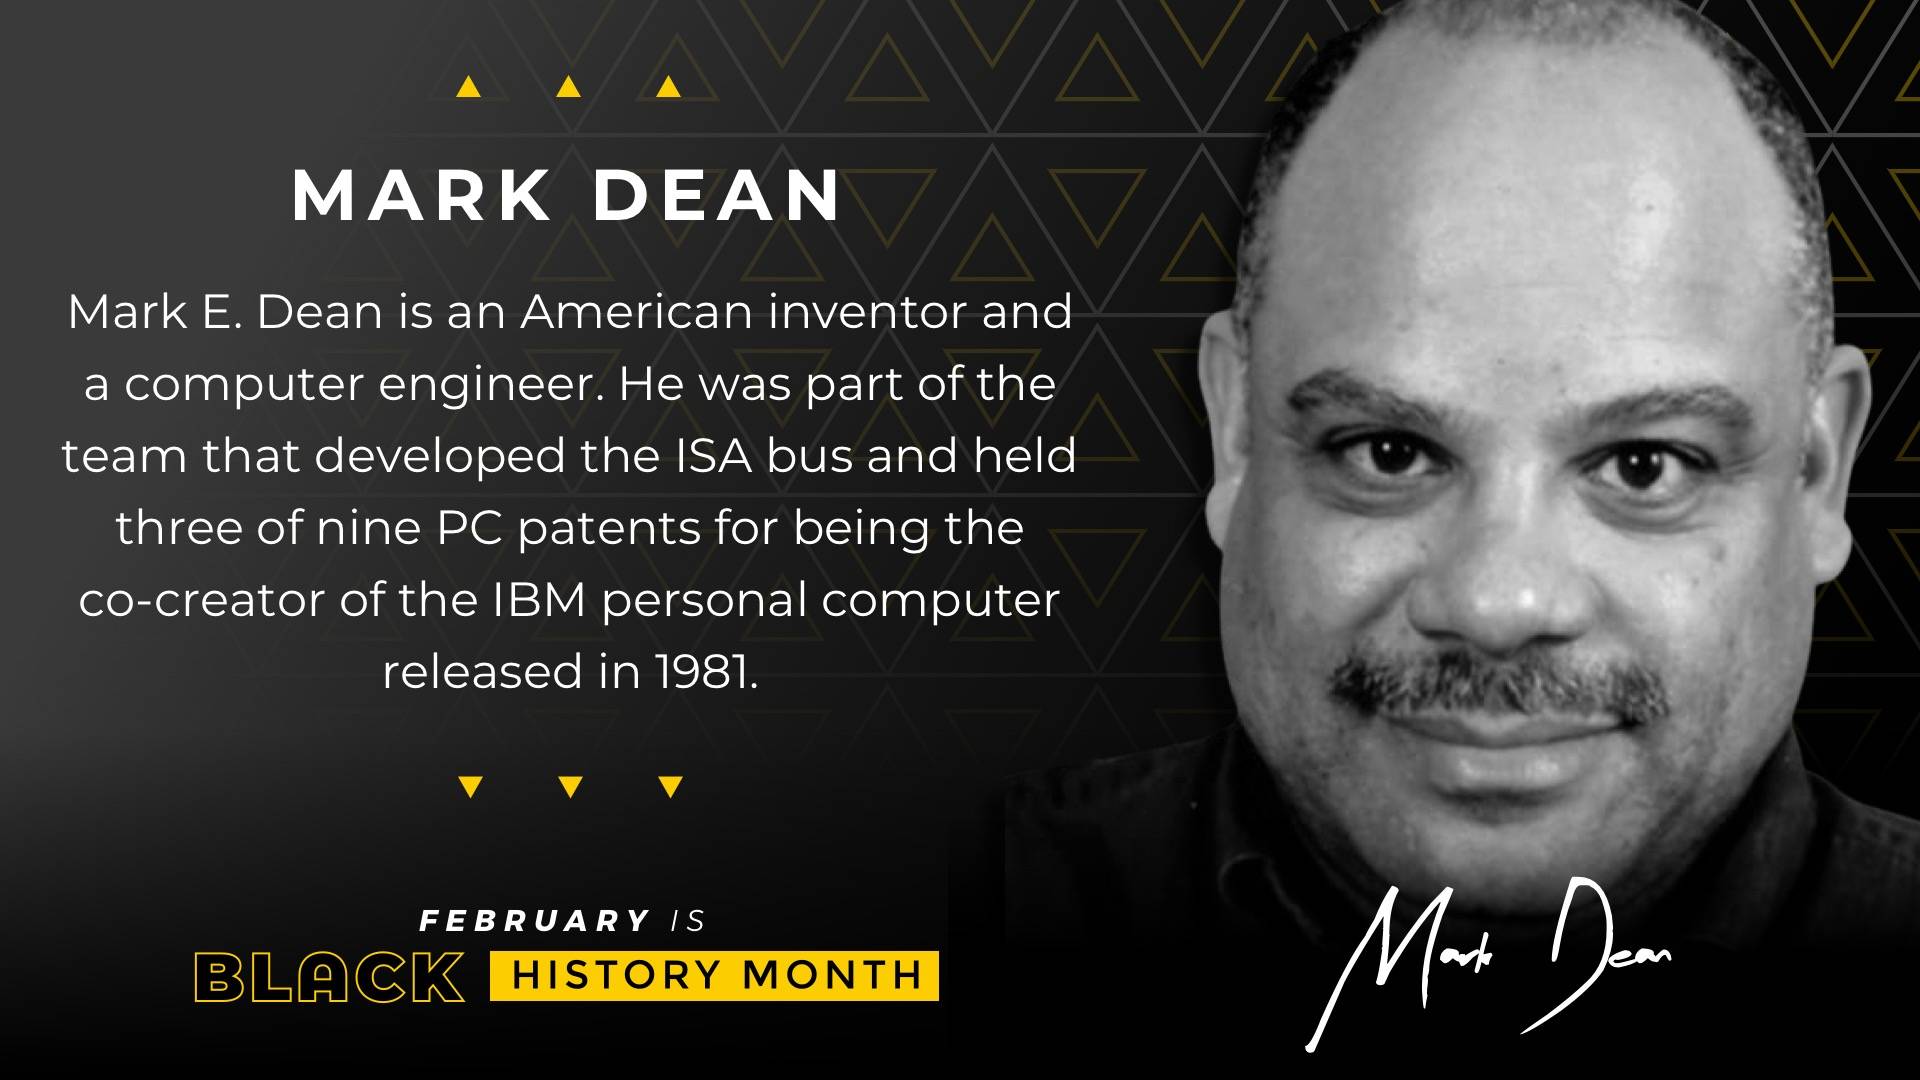 Black History Month - Mark Dean Digital Signage Template